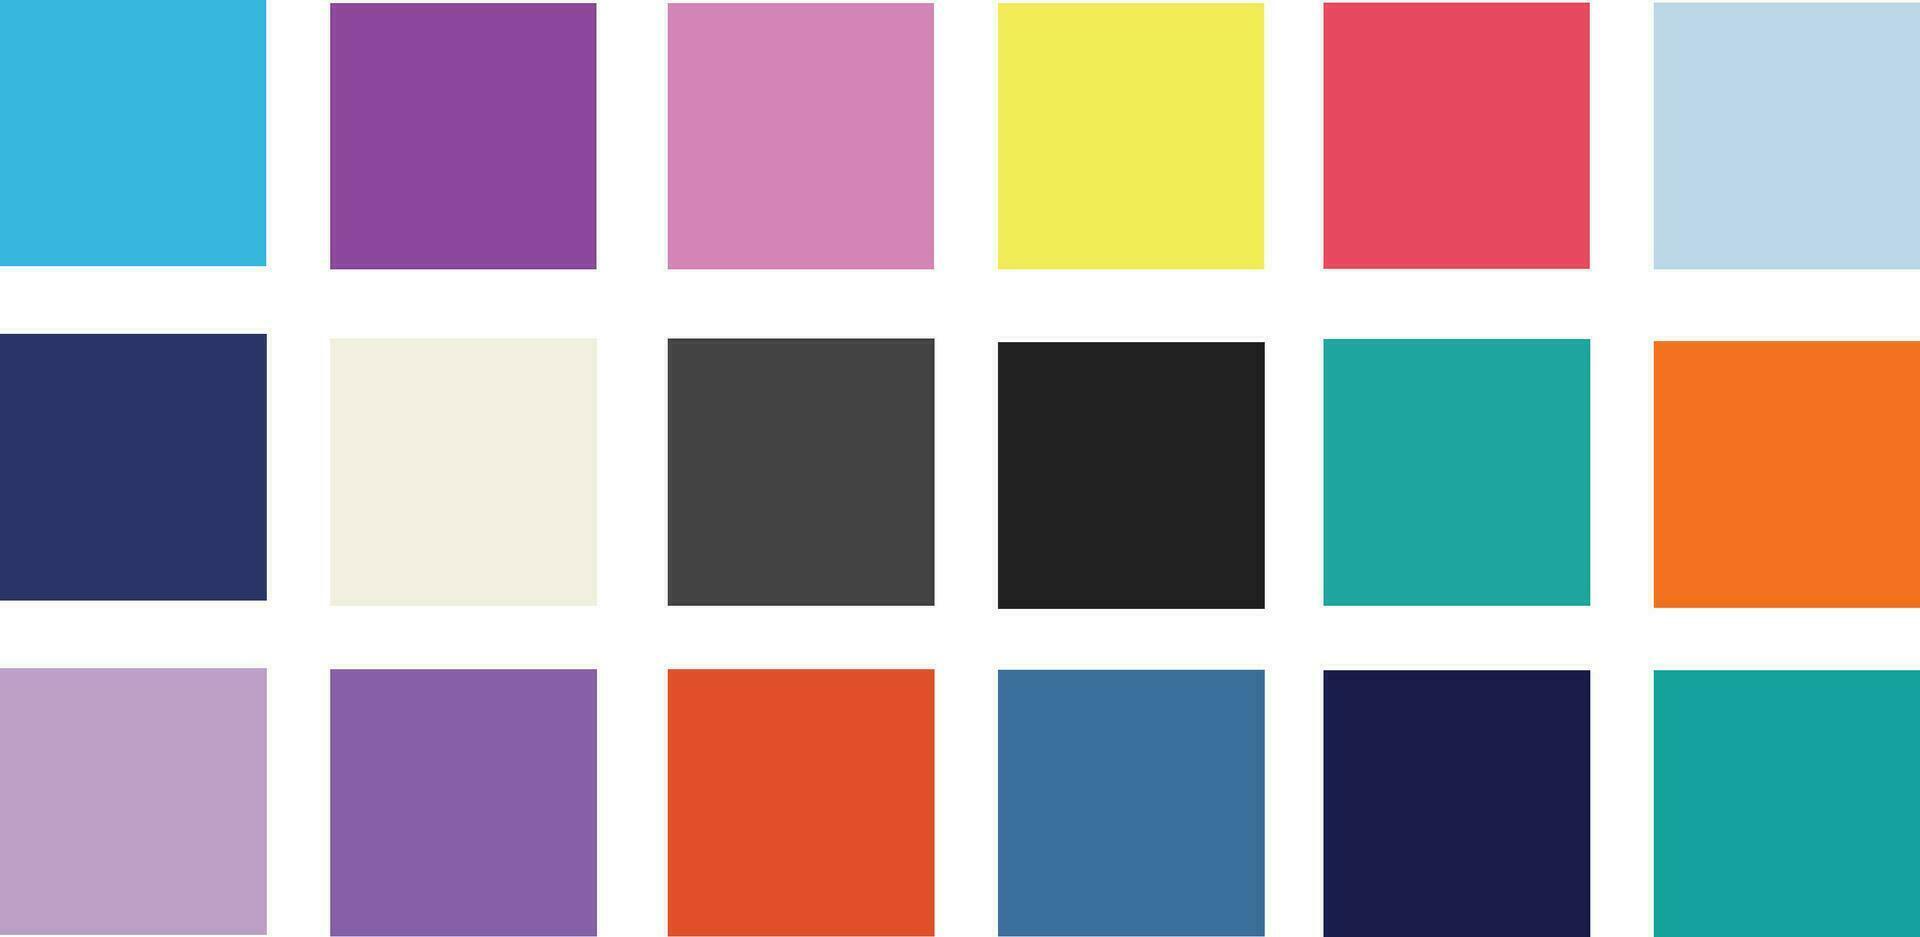 kleur reeks palet vector illustratie retro